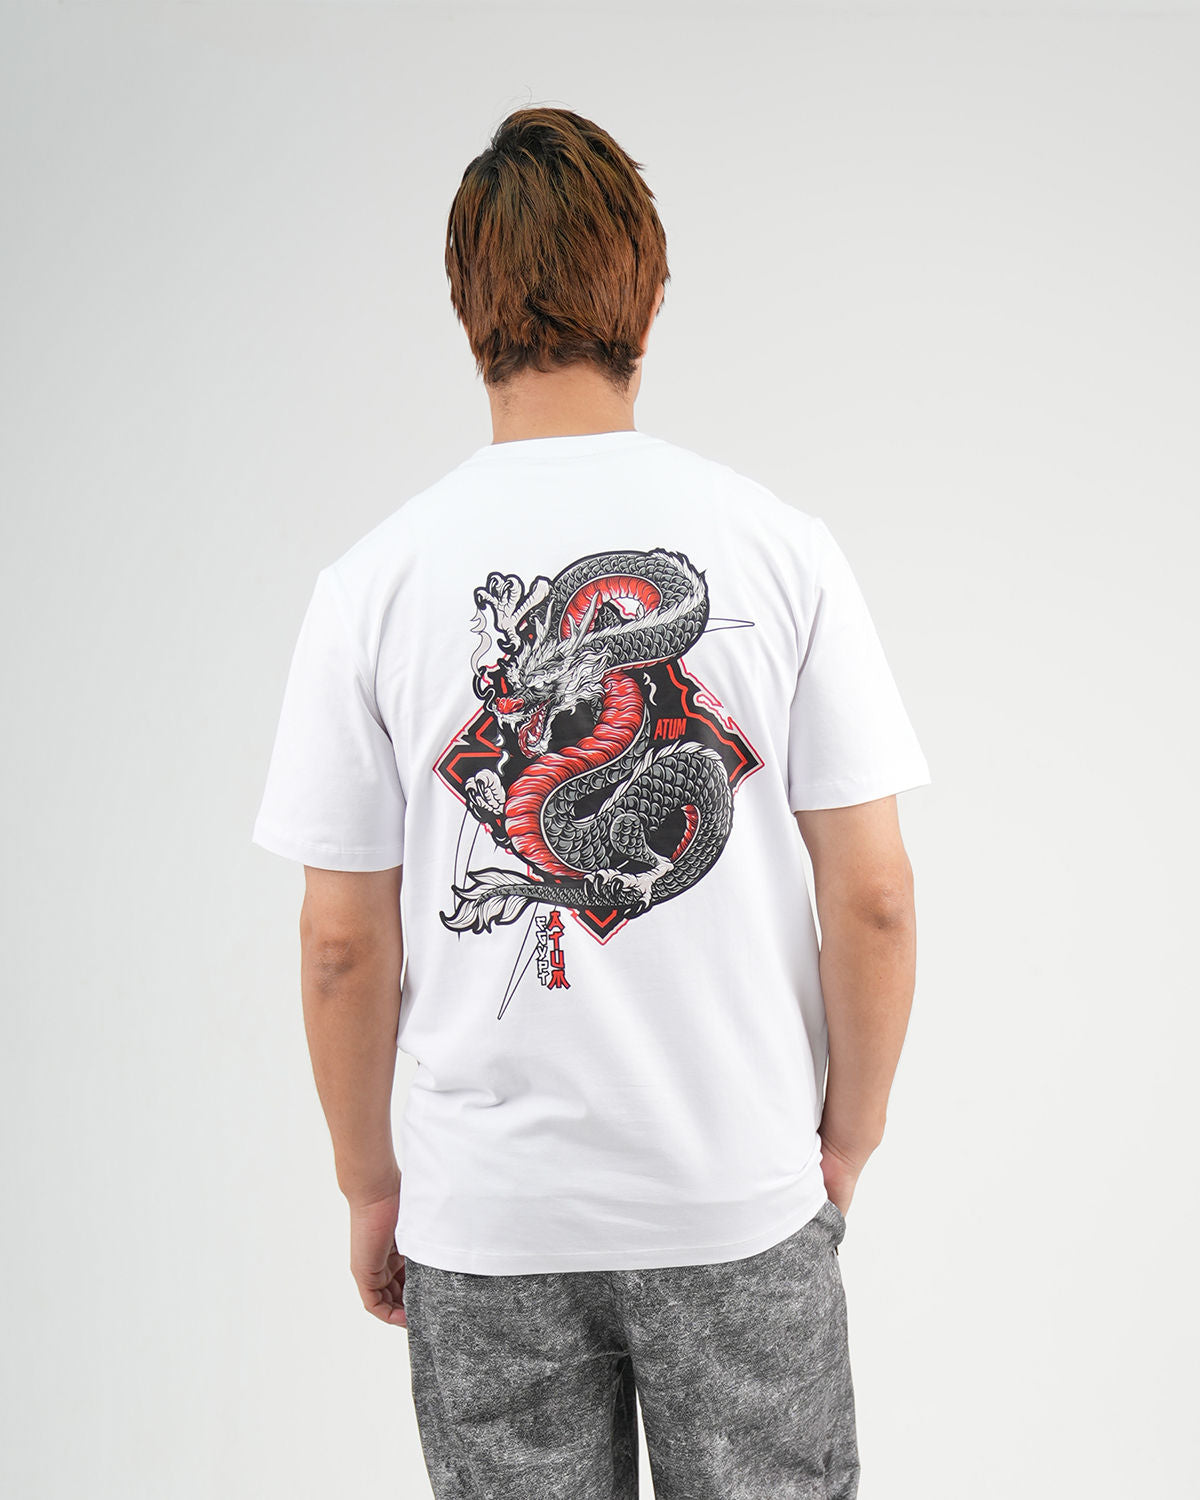 Cobra Strike Graphic Men's Tee - White with red cobra print